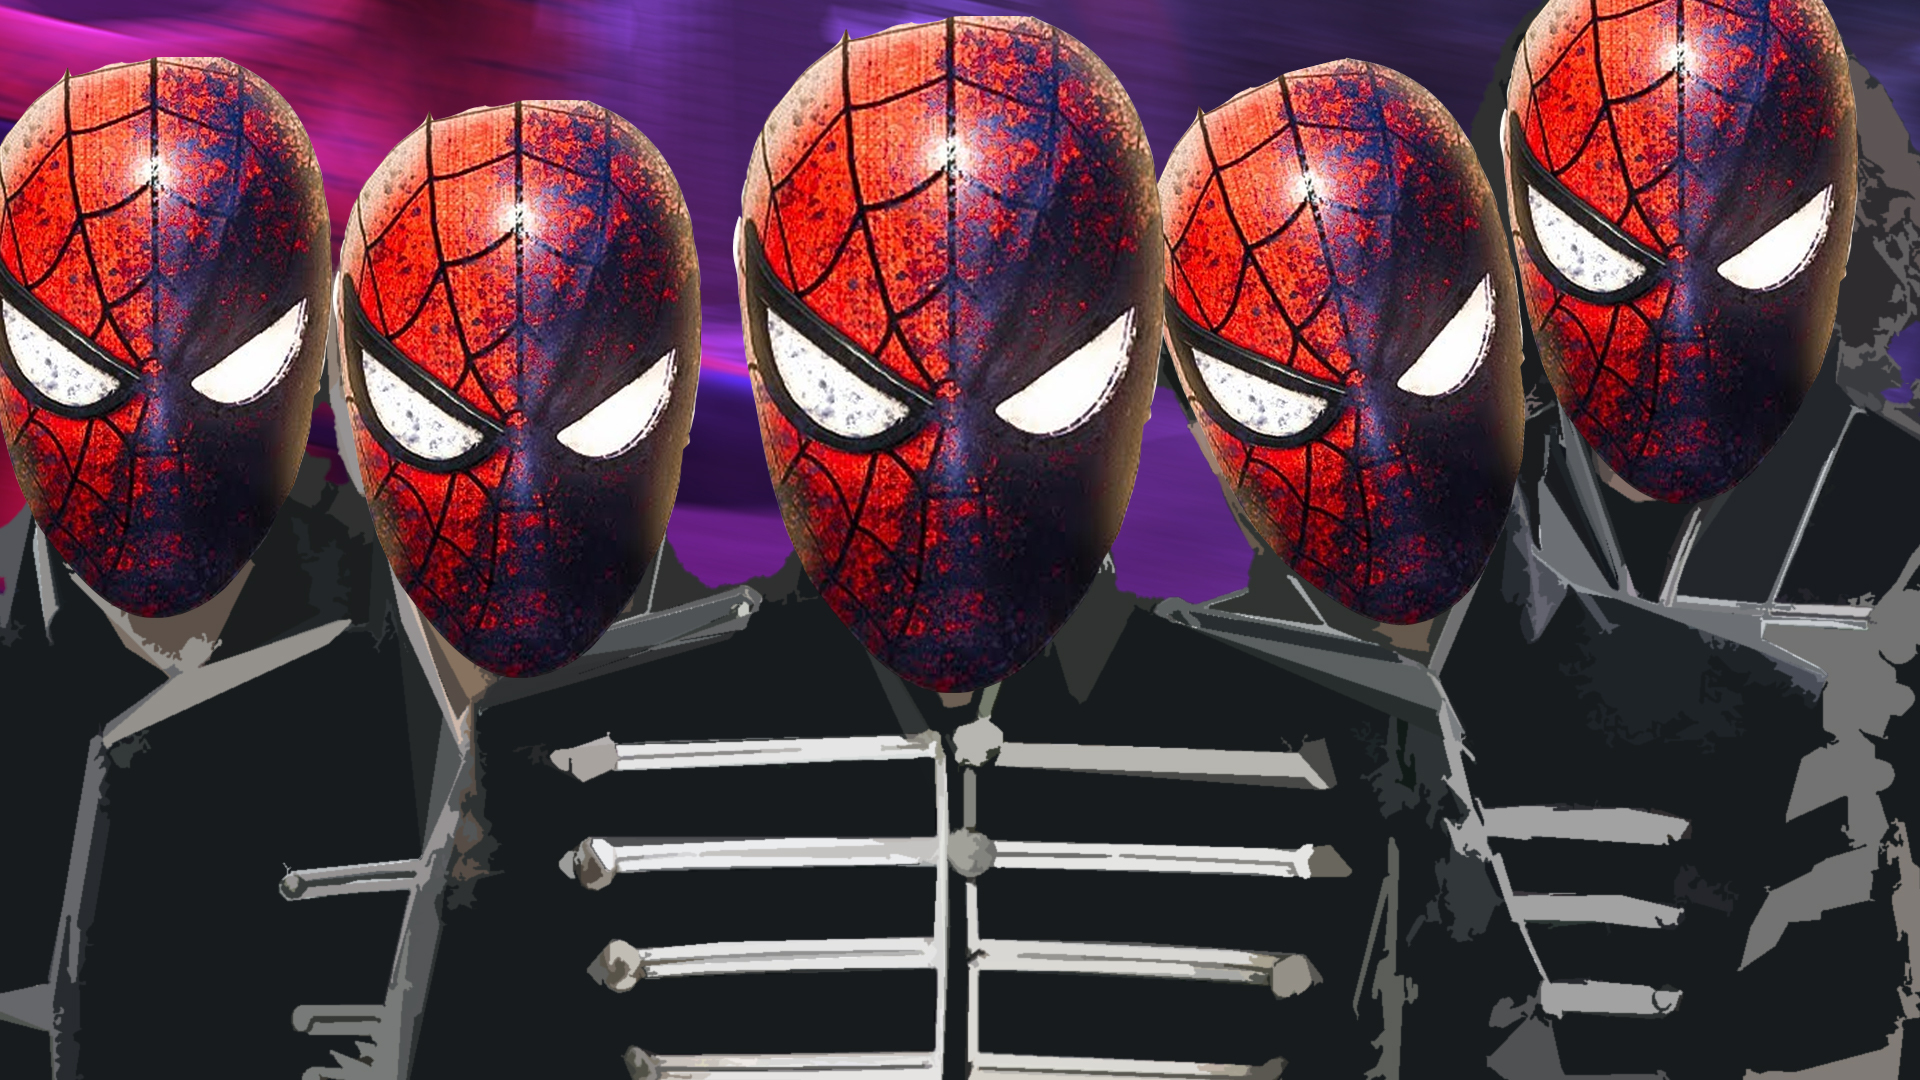 Spider-Man: Web of Shadows (2008)